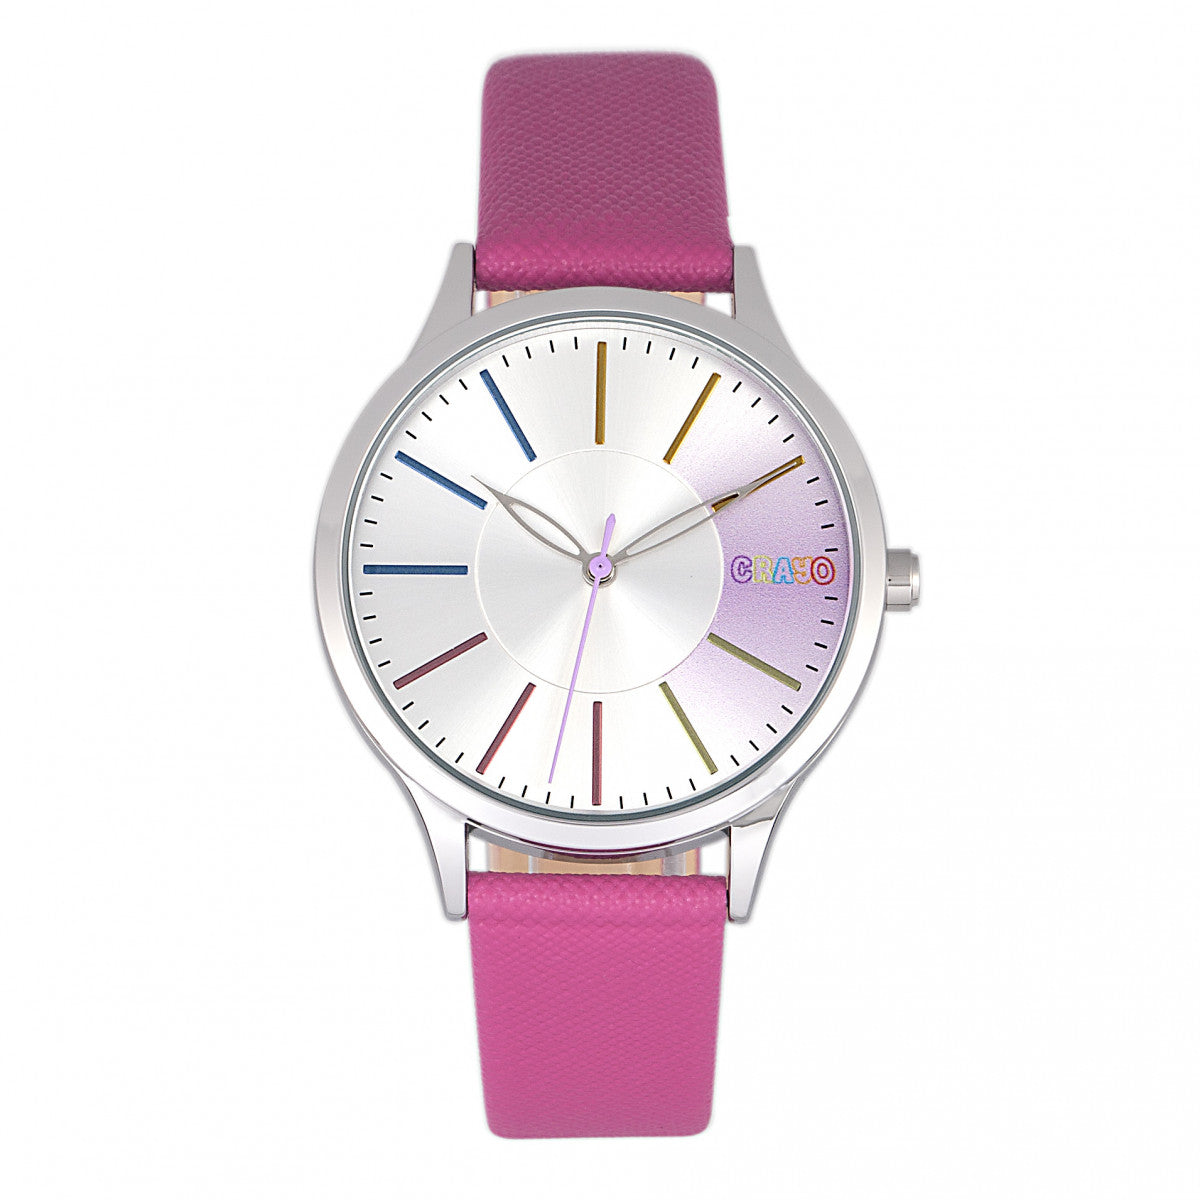 Crayo Gel Unisex Watch - Hot Pink - CRACR5103